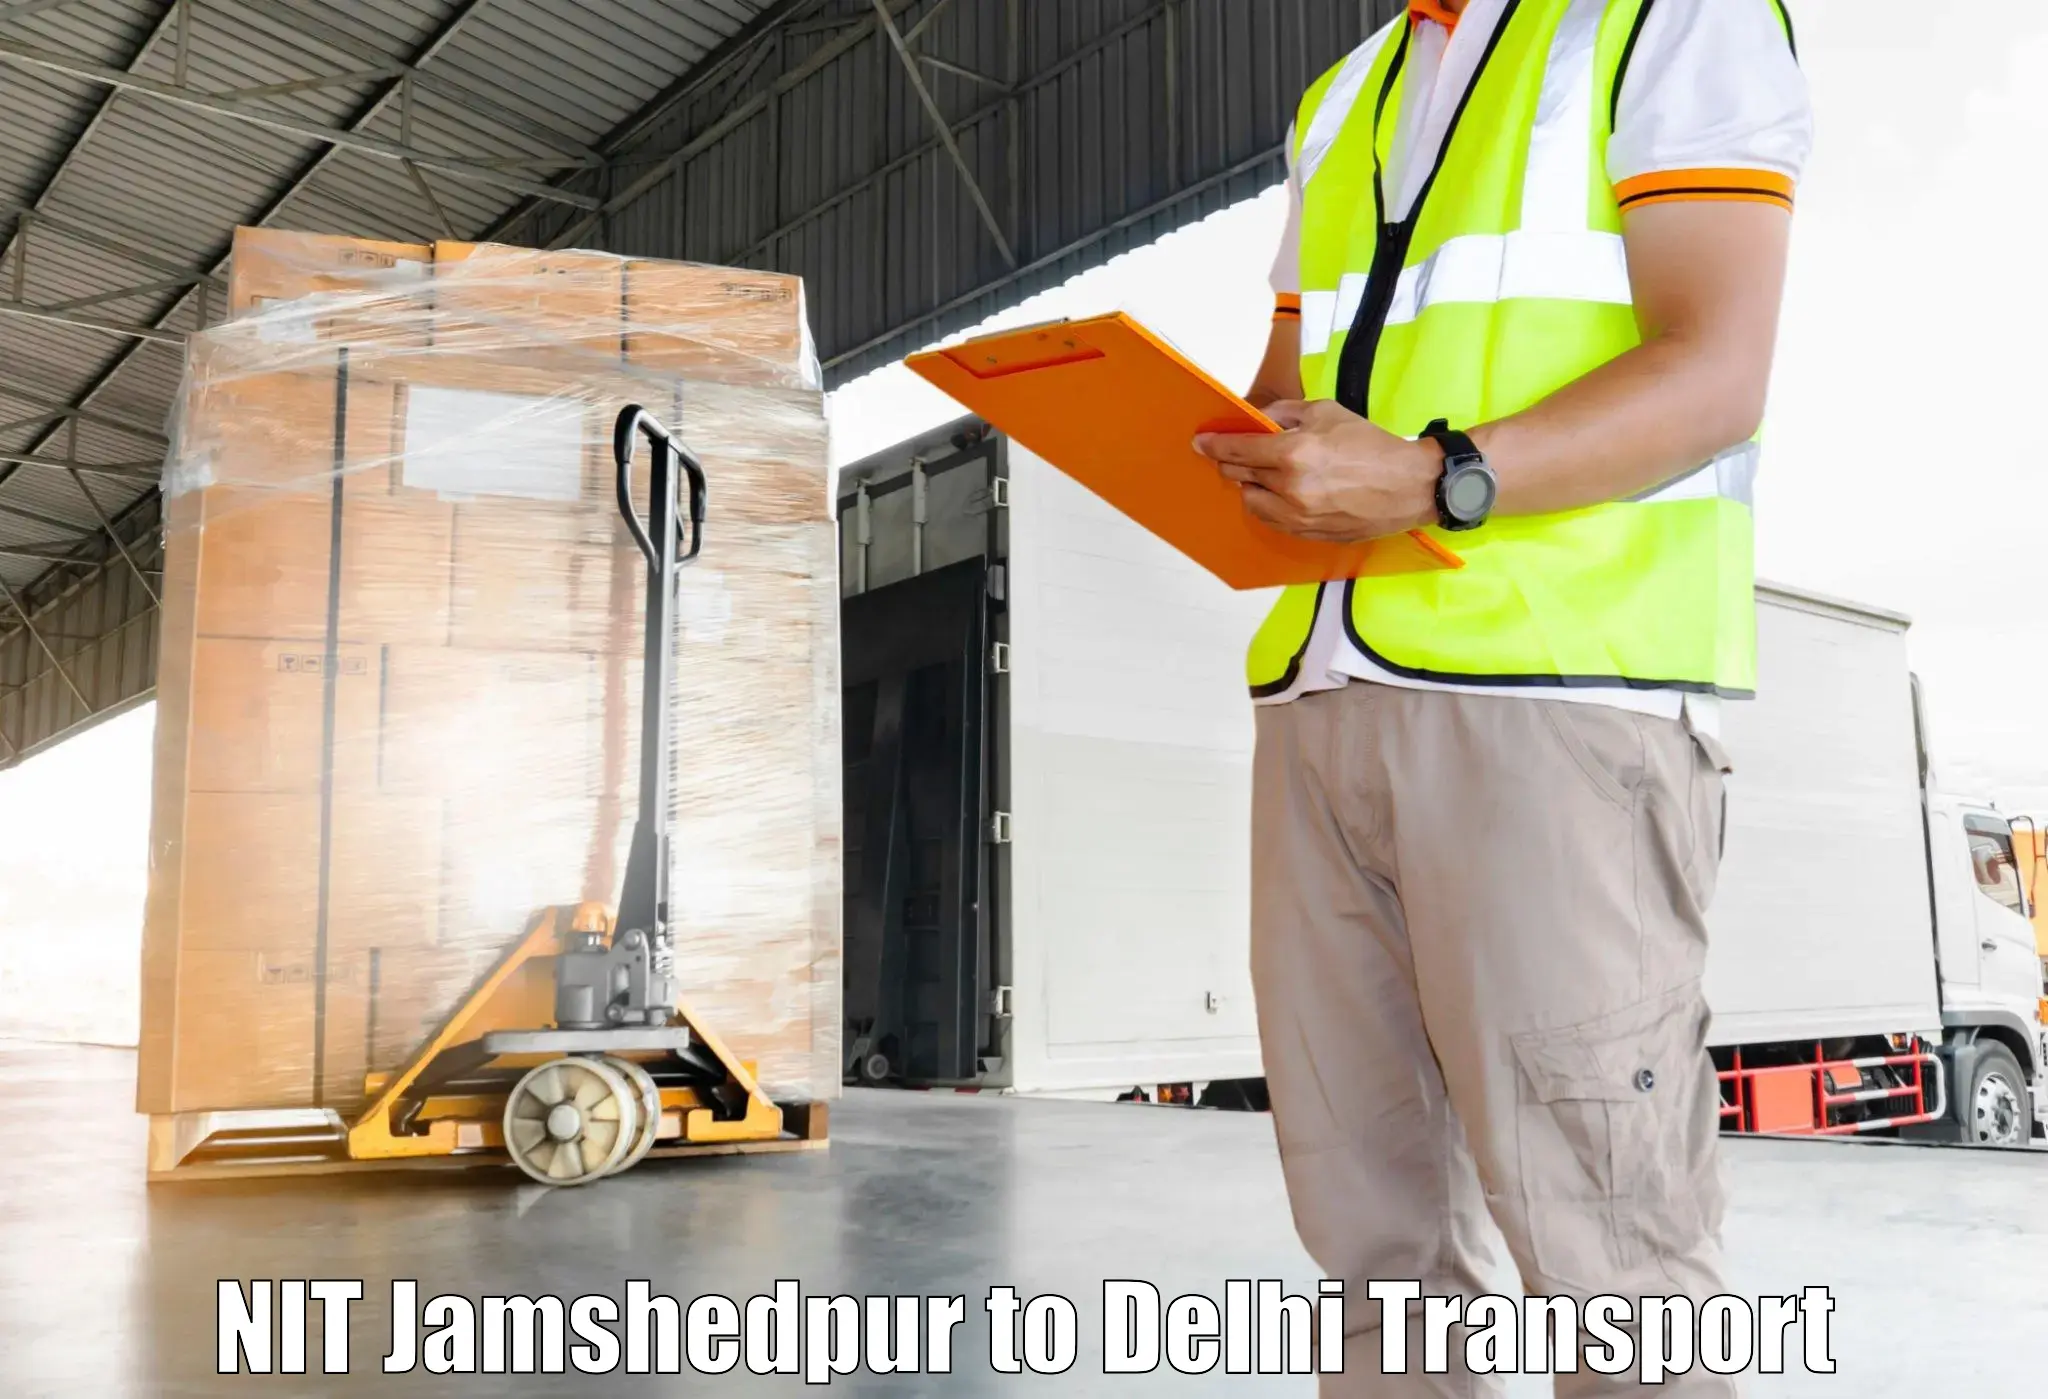 Vehicle transport services NIT Jamshedpur to IIT Delhi